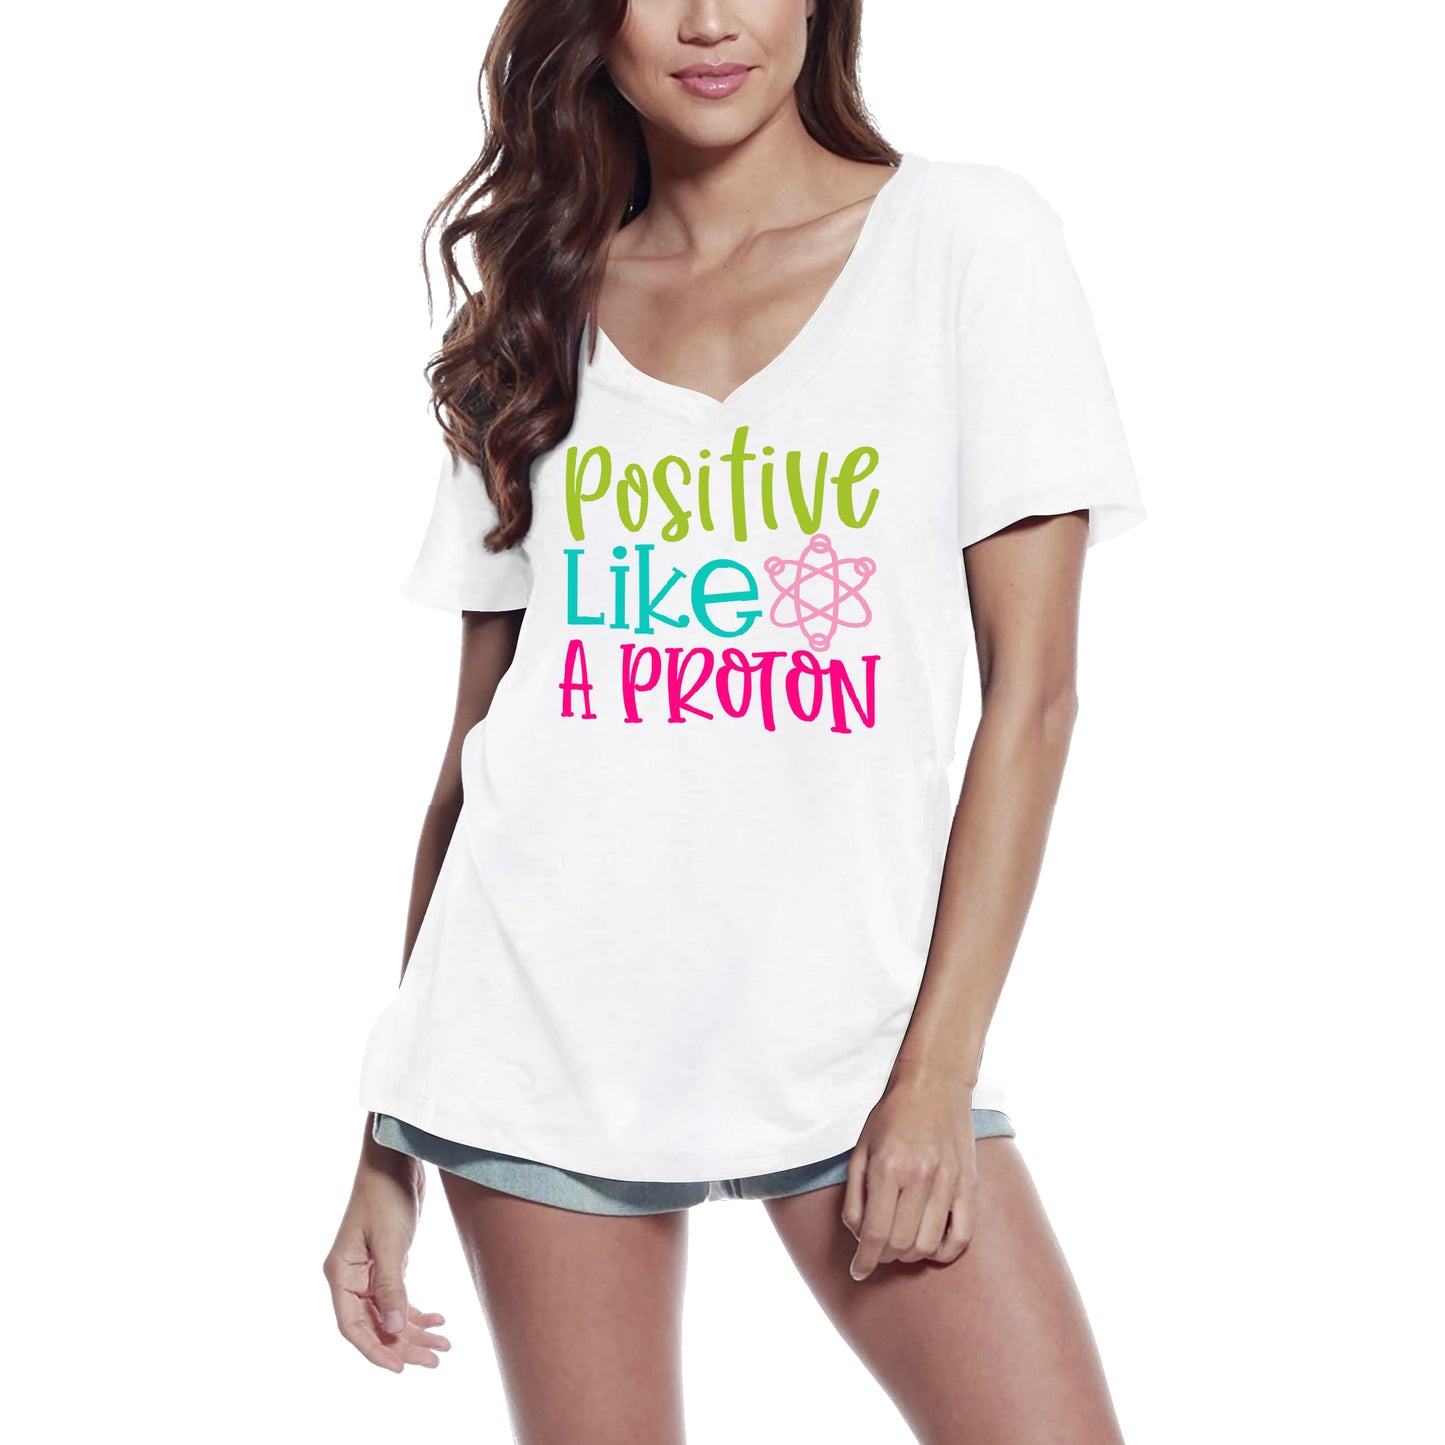 ULTRABASIC Women's T-Shirt Positive Like A Proton - Short Sleeve Tee Shirt Tops